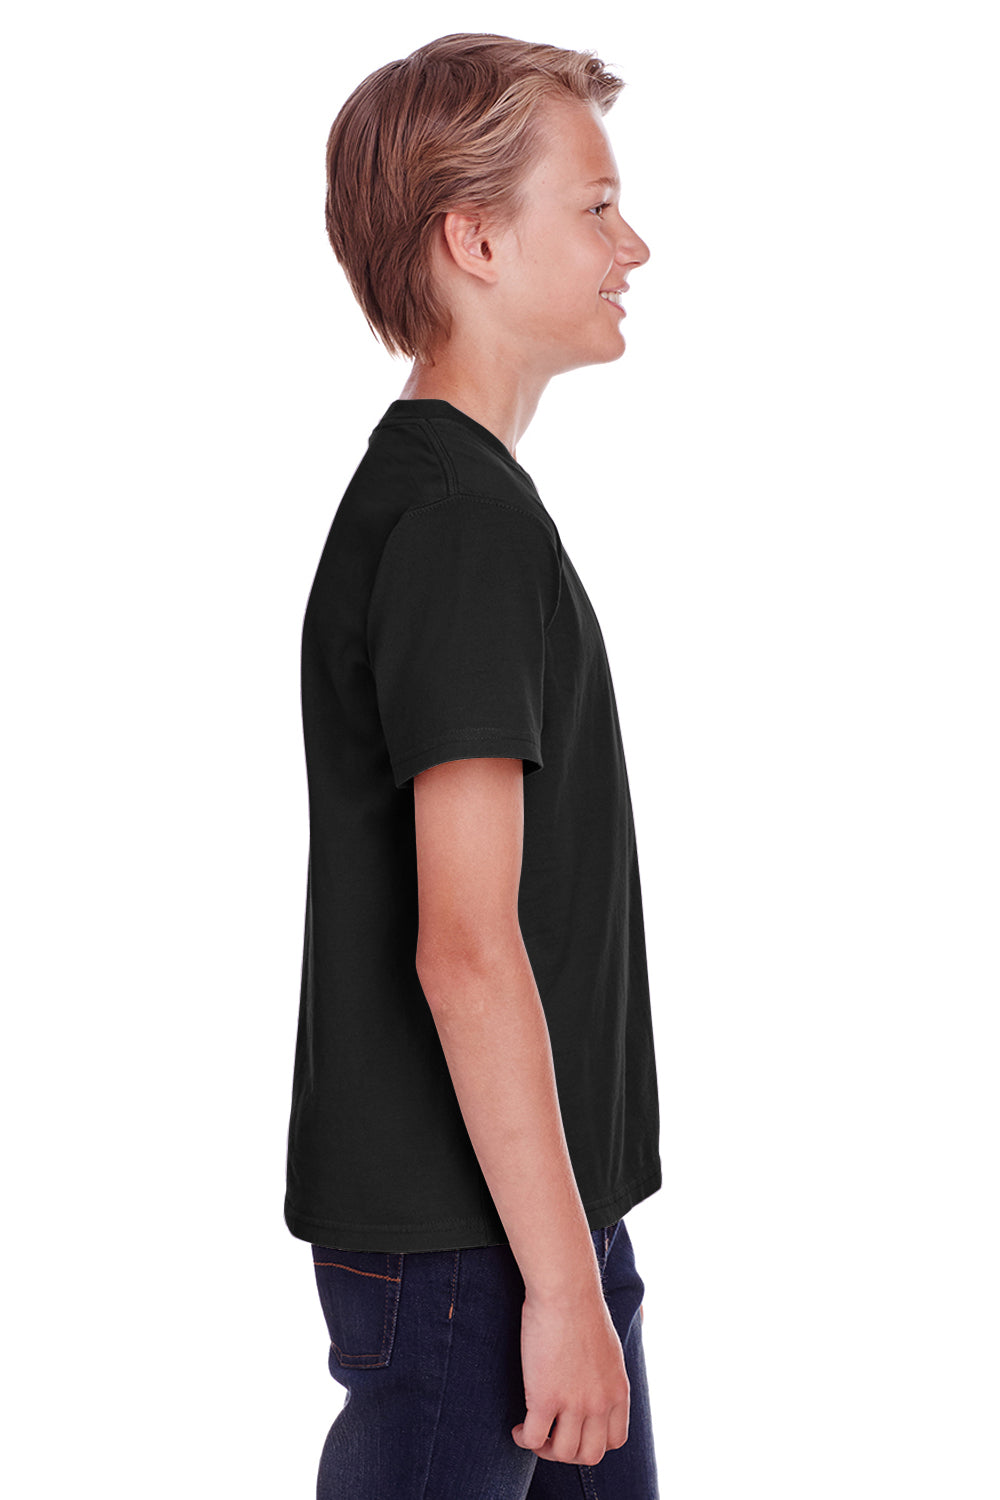 ComfortWash by Hanes GDH175 Youth Short Sleeve Crewneck T-Shirt Black Side